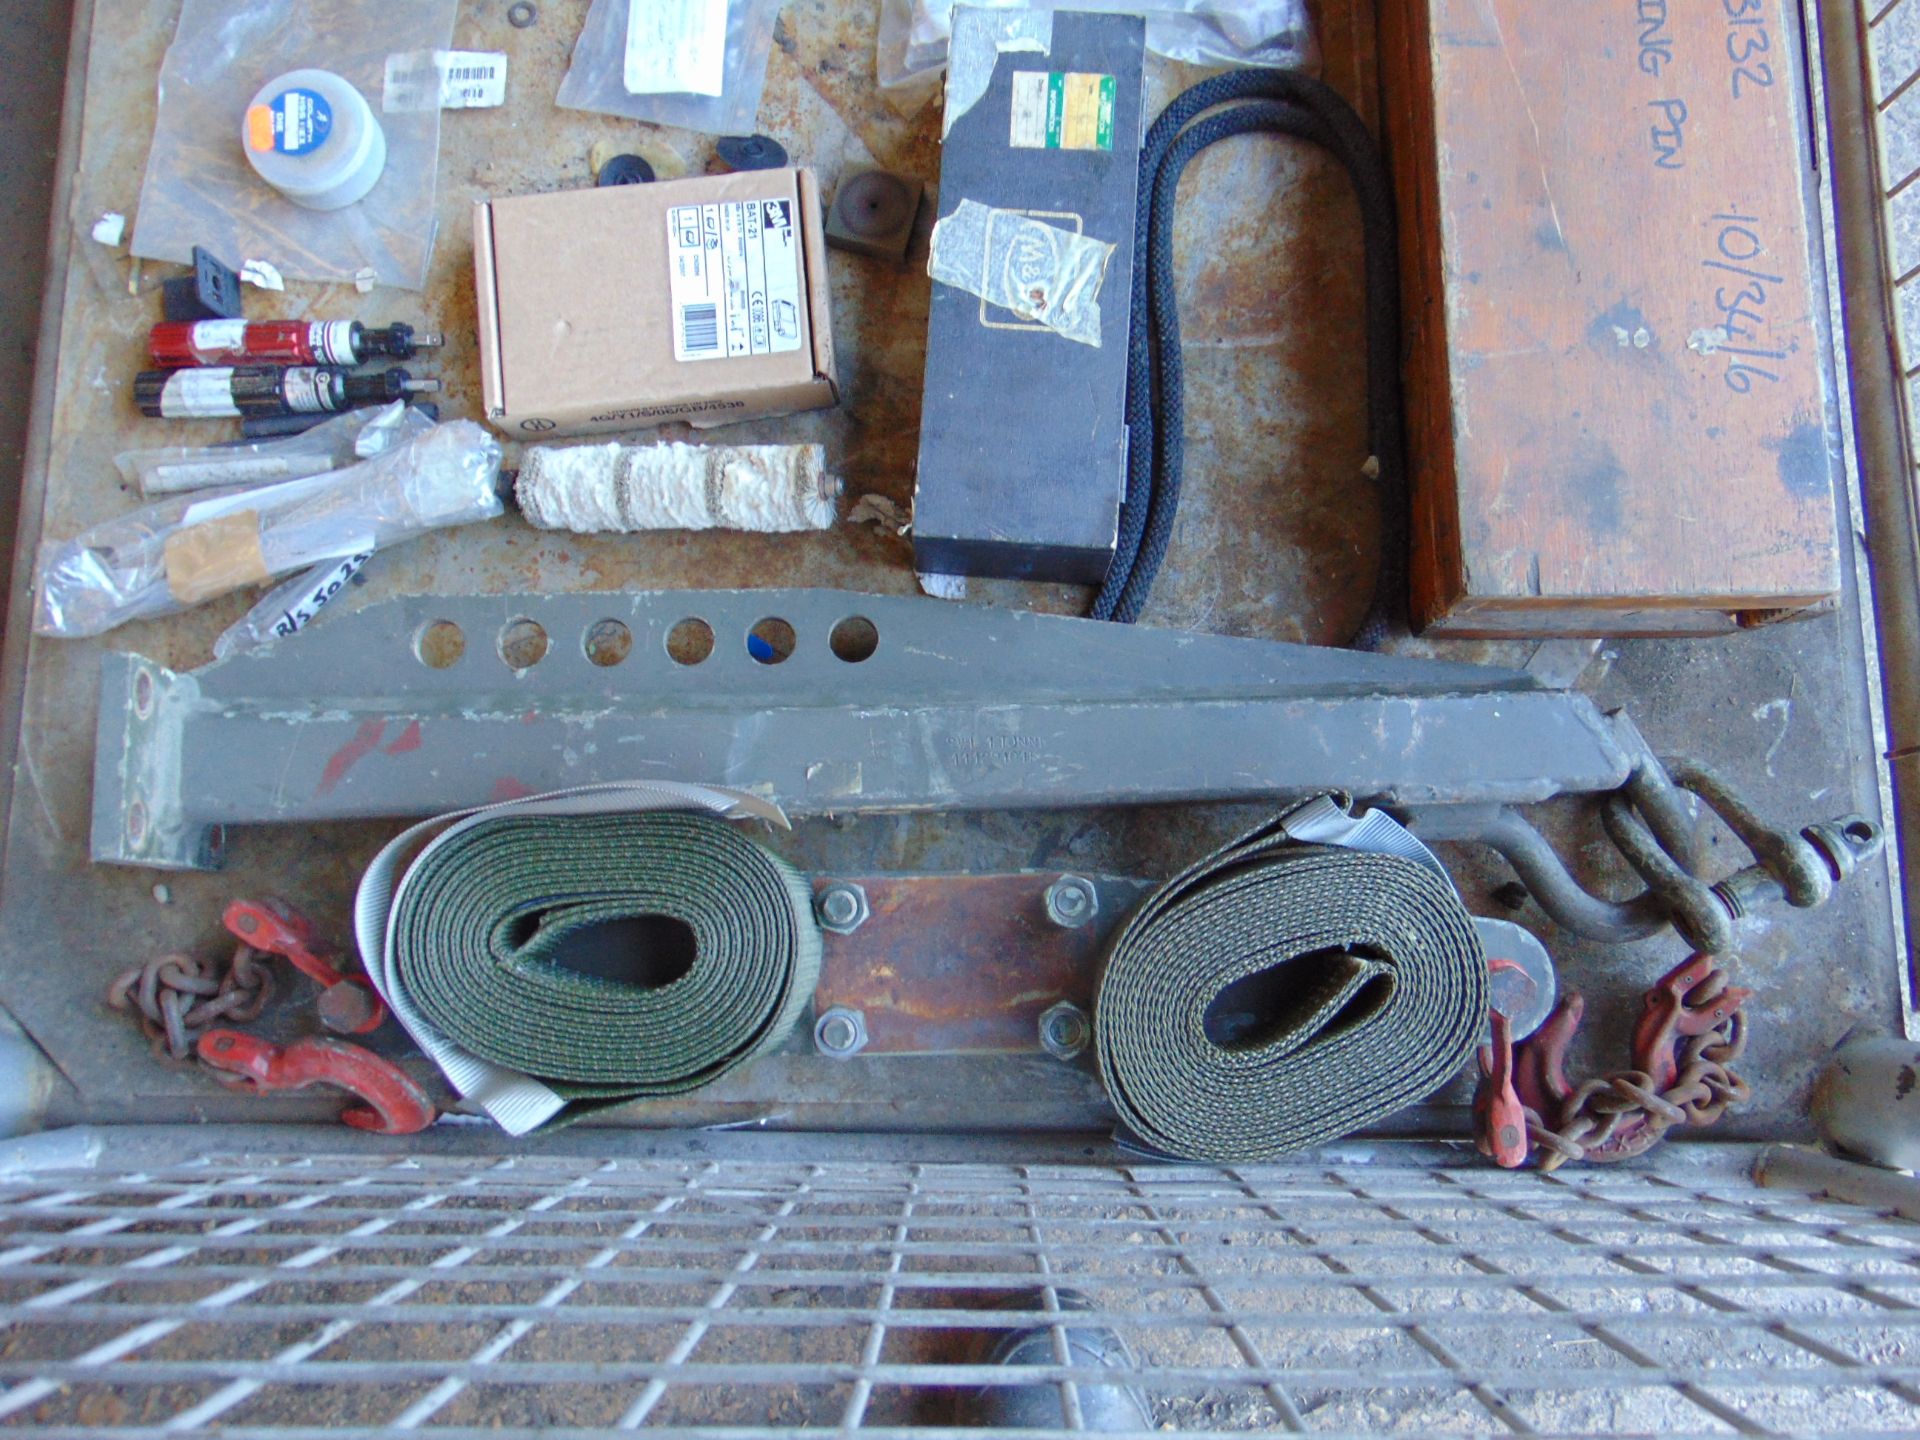 Stillage of Tools, Gauge Camber Kit, Lifting Bar etc - Image 7 of 7